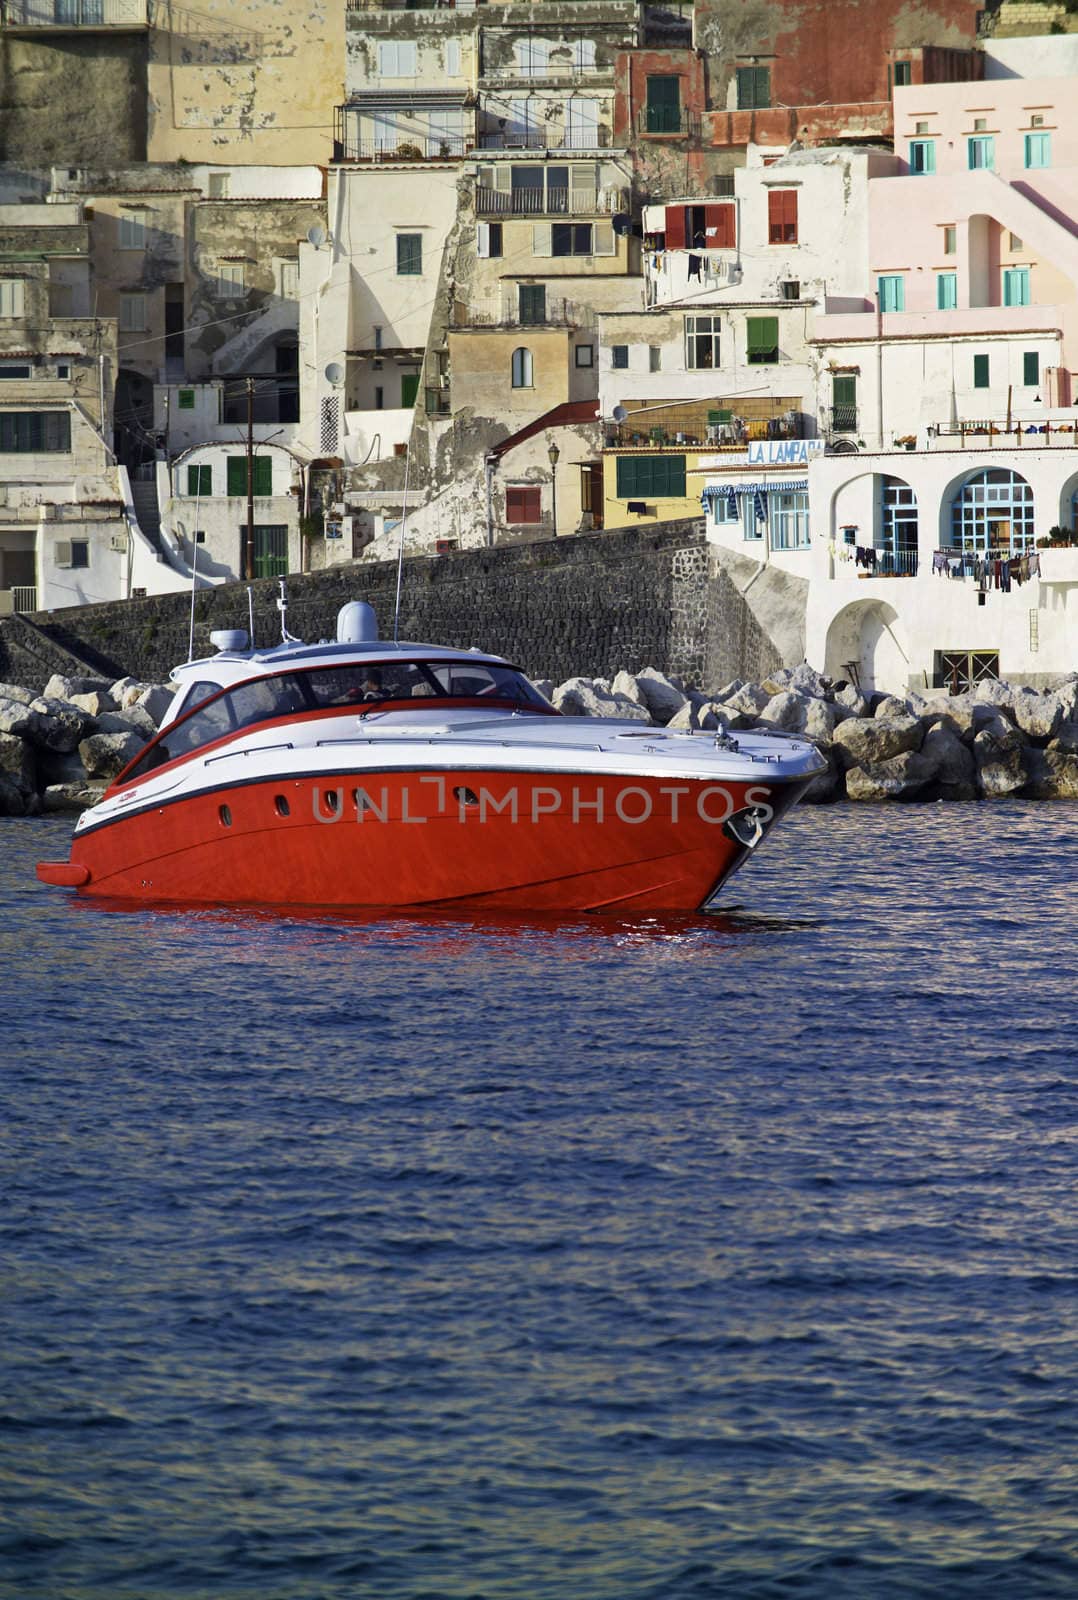 ITALY, Campania, Procica island, a luxury yacht in the island's bay